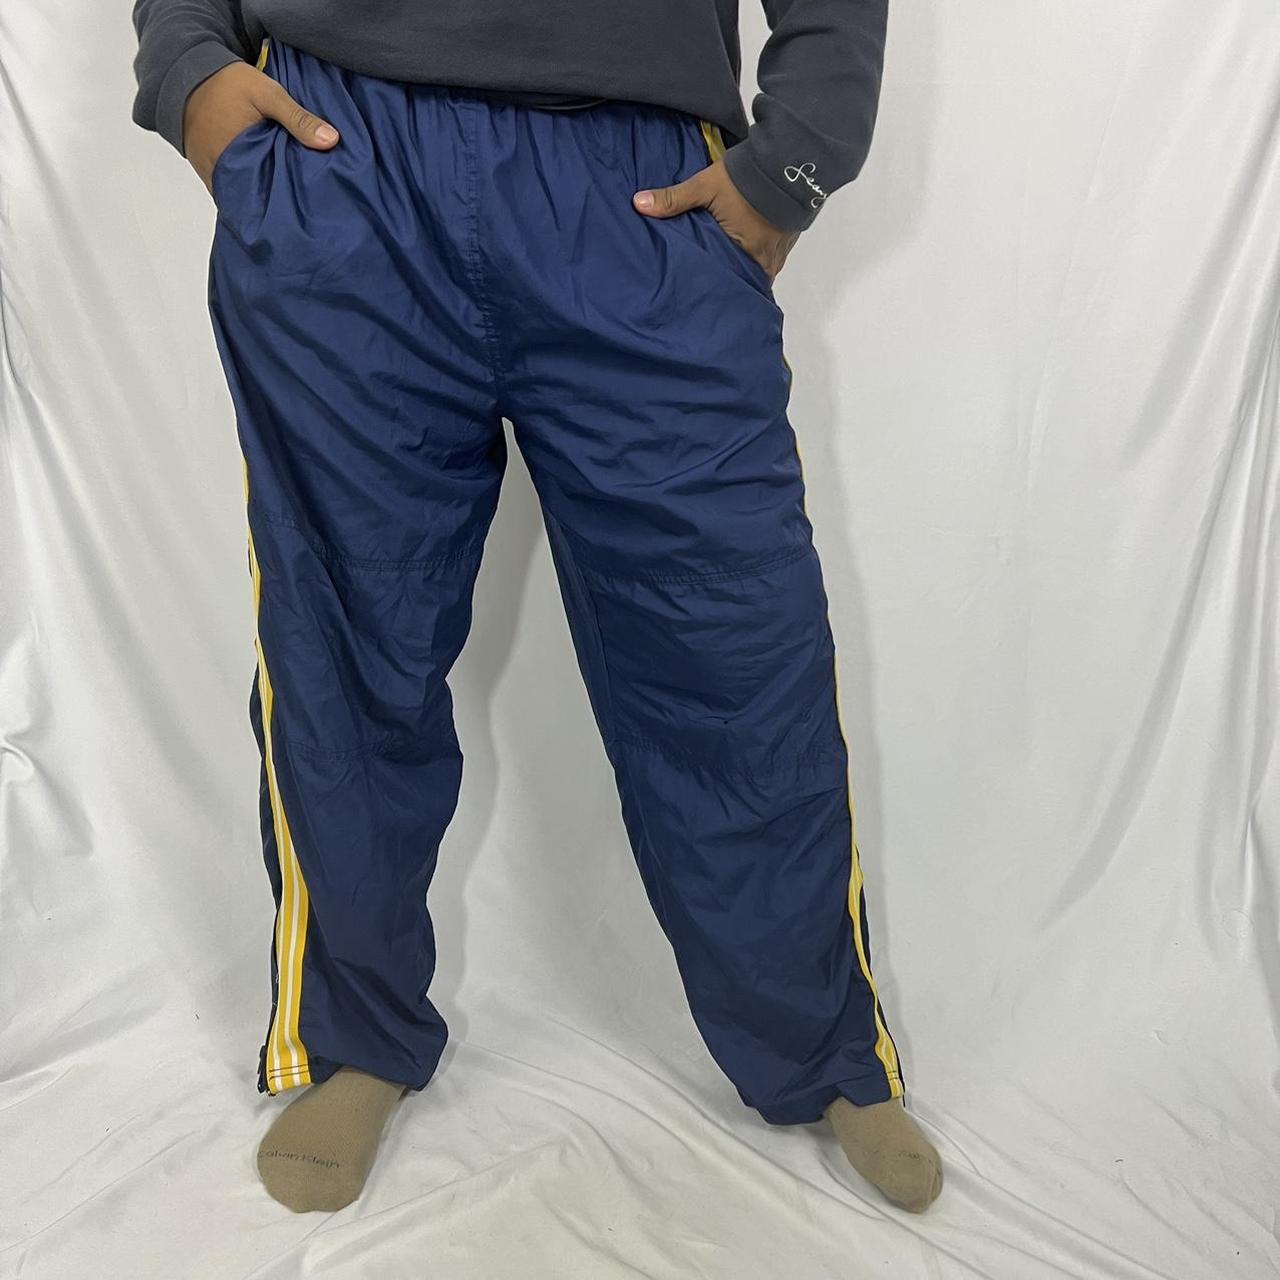 02 Vintage Blue Yellow 3 Stripe Capri Mesh Athletic Track Pants